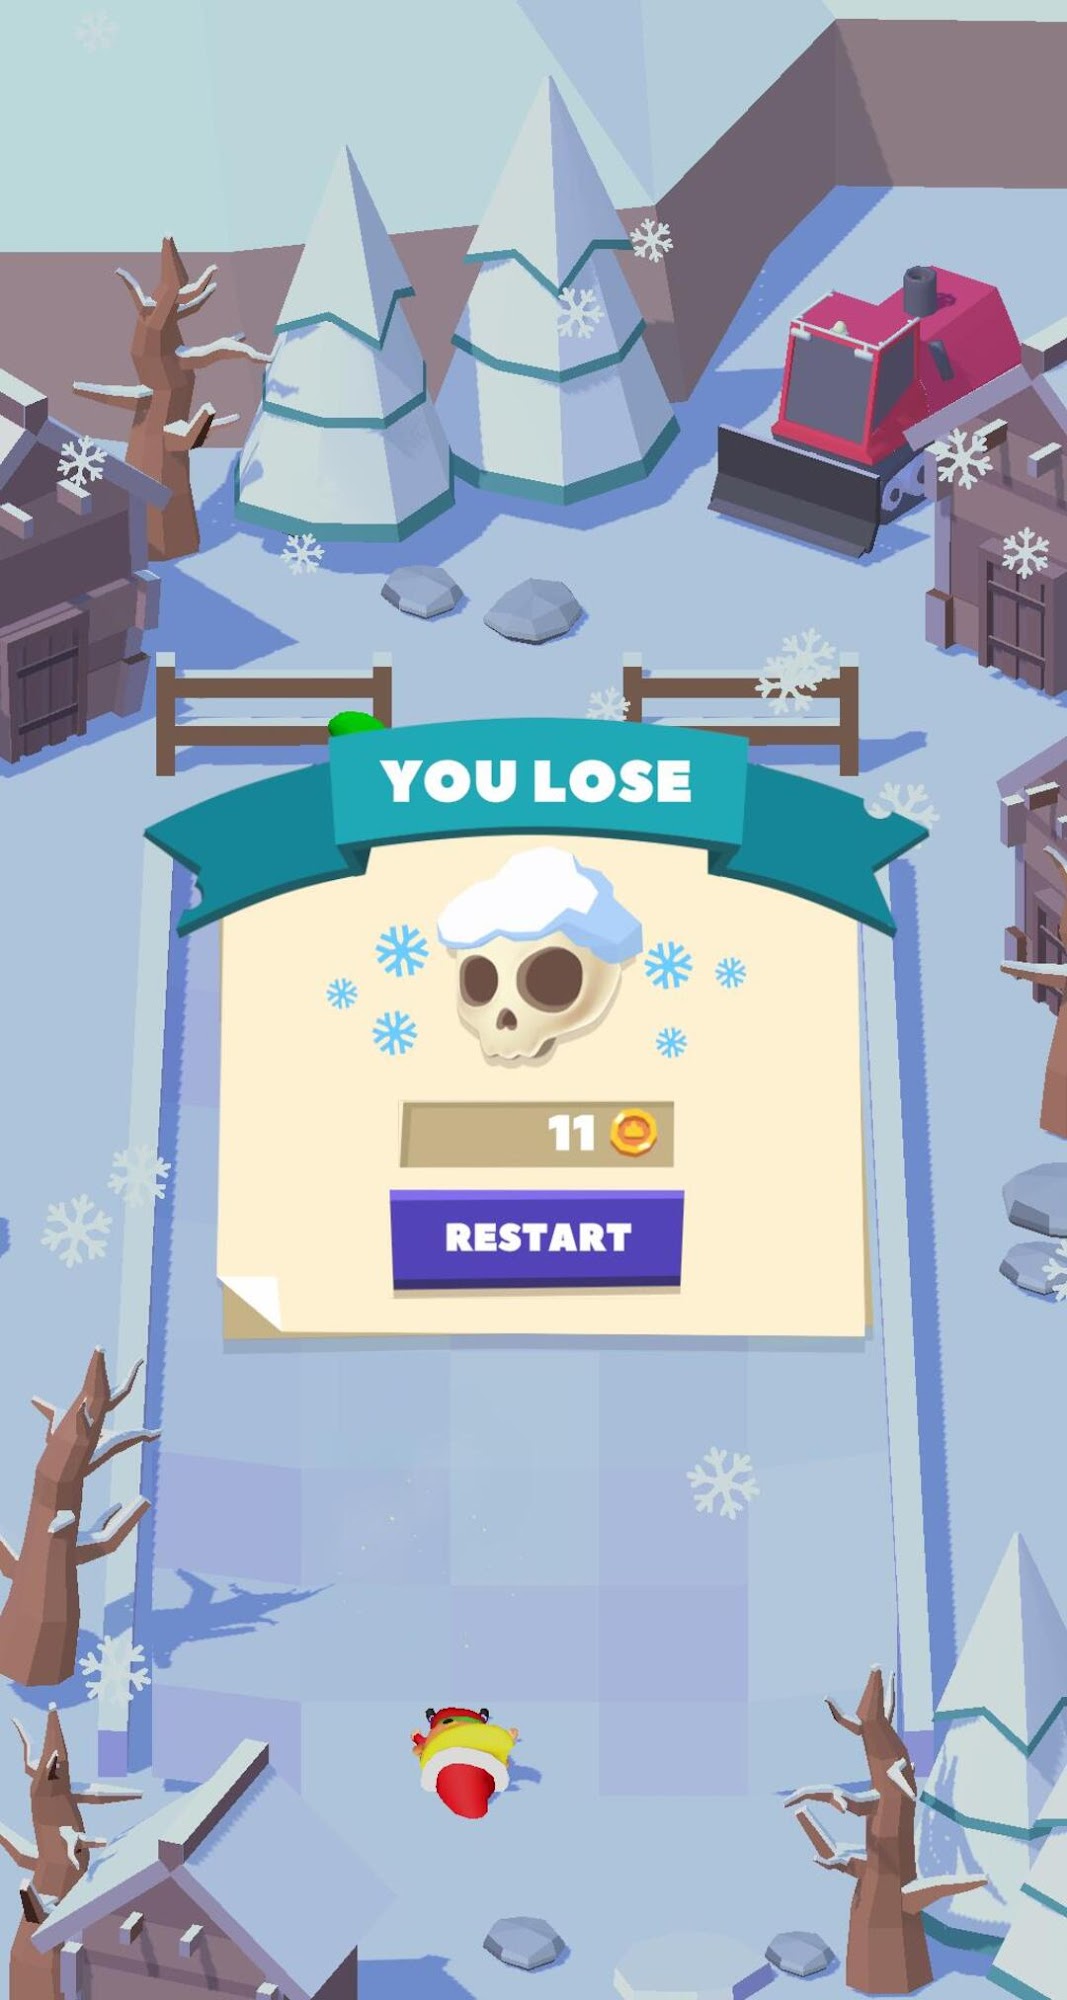 Snowball Battle - Android game screenshots.